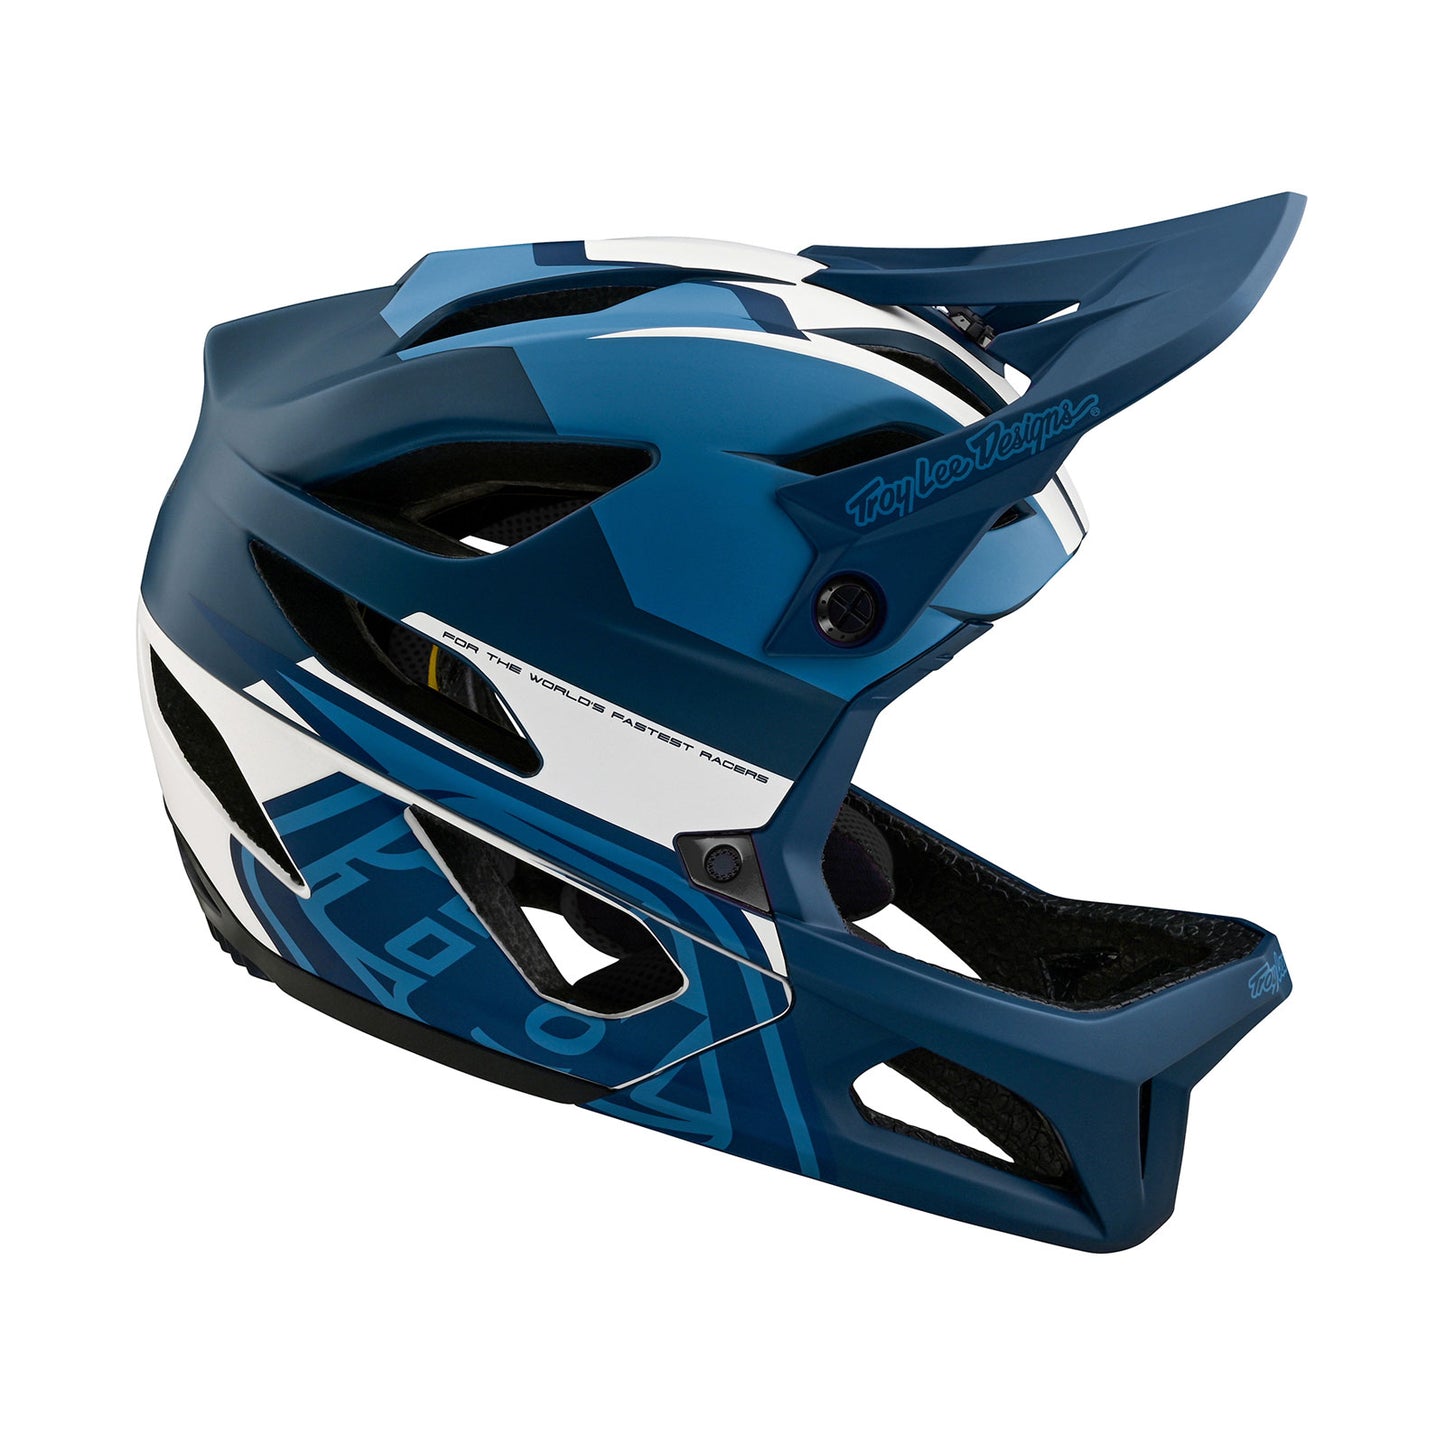 Stage Helmet Vector Blue